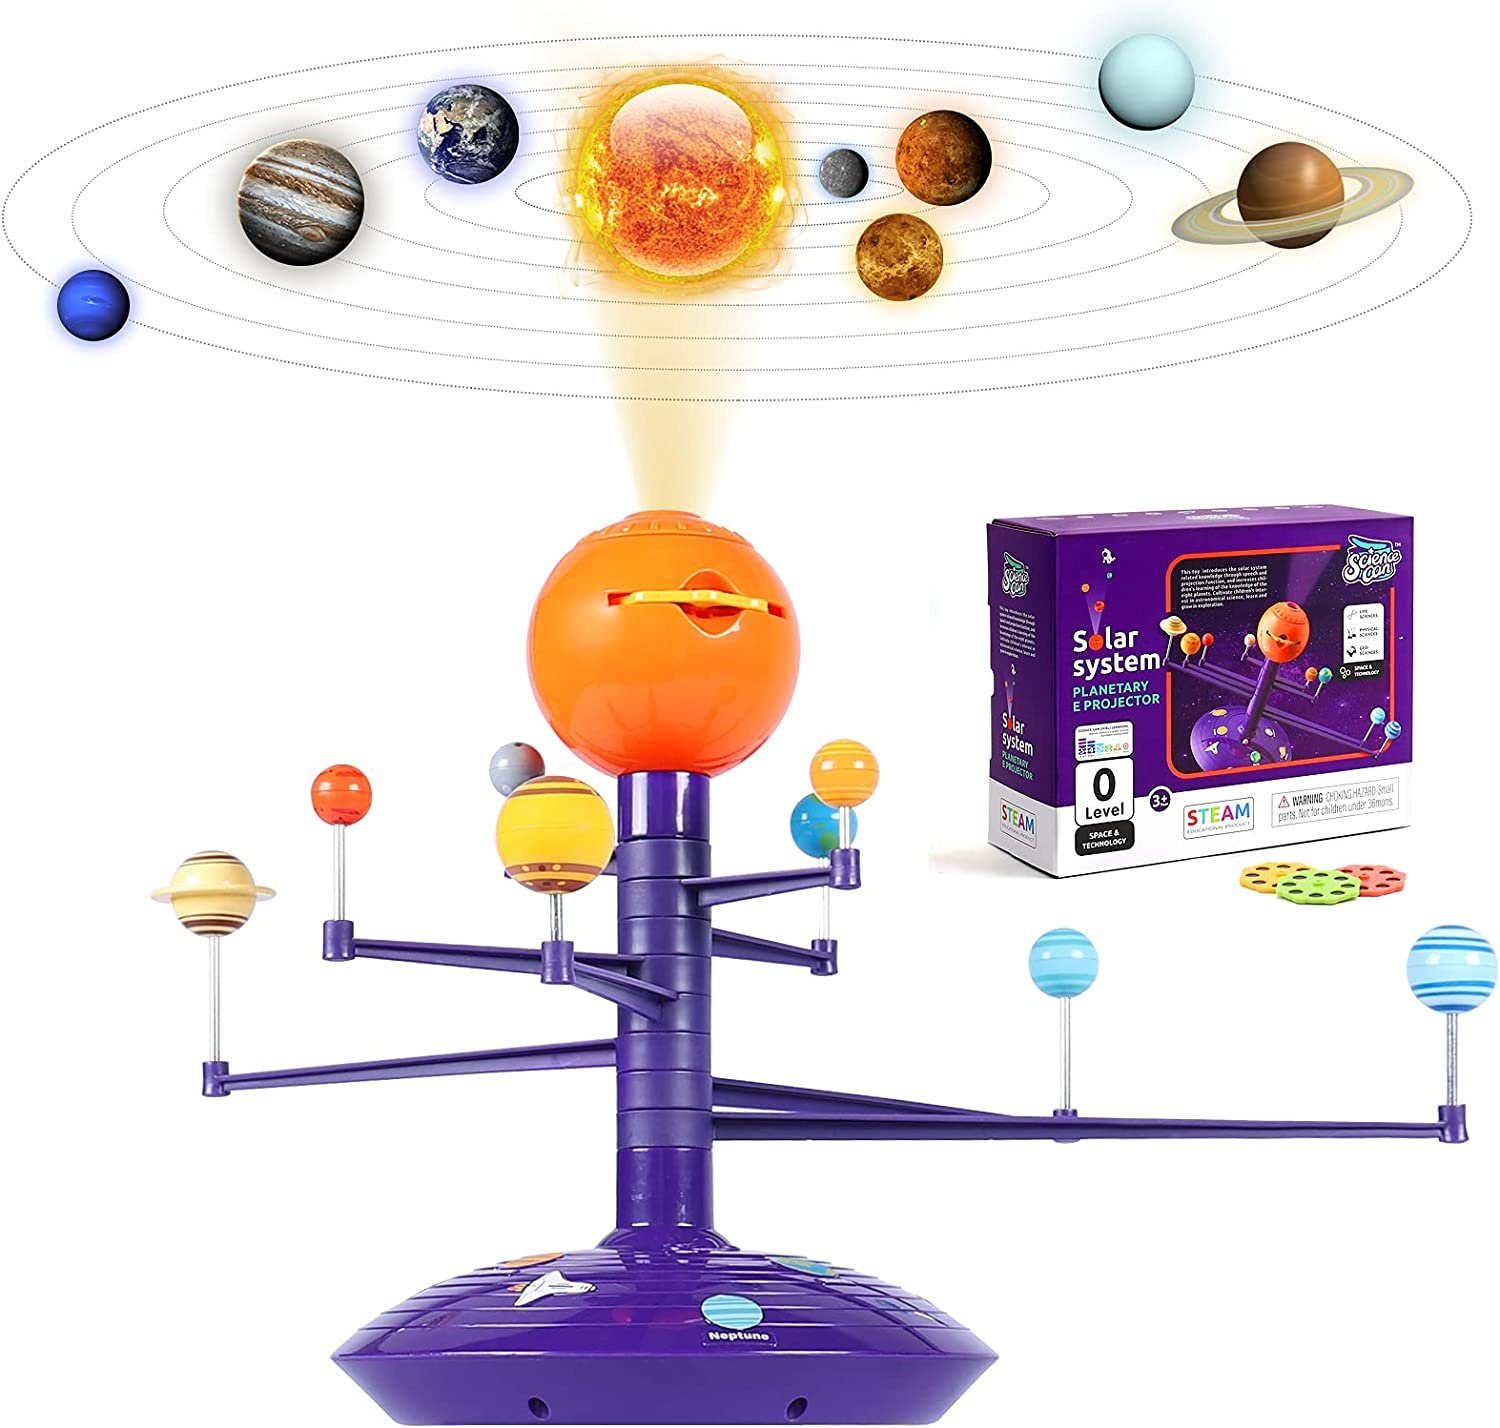 Inshow Modellbausatz Planeten modell des Sonnensystems dreht acht astronomische Apparate